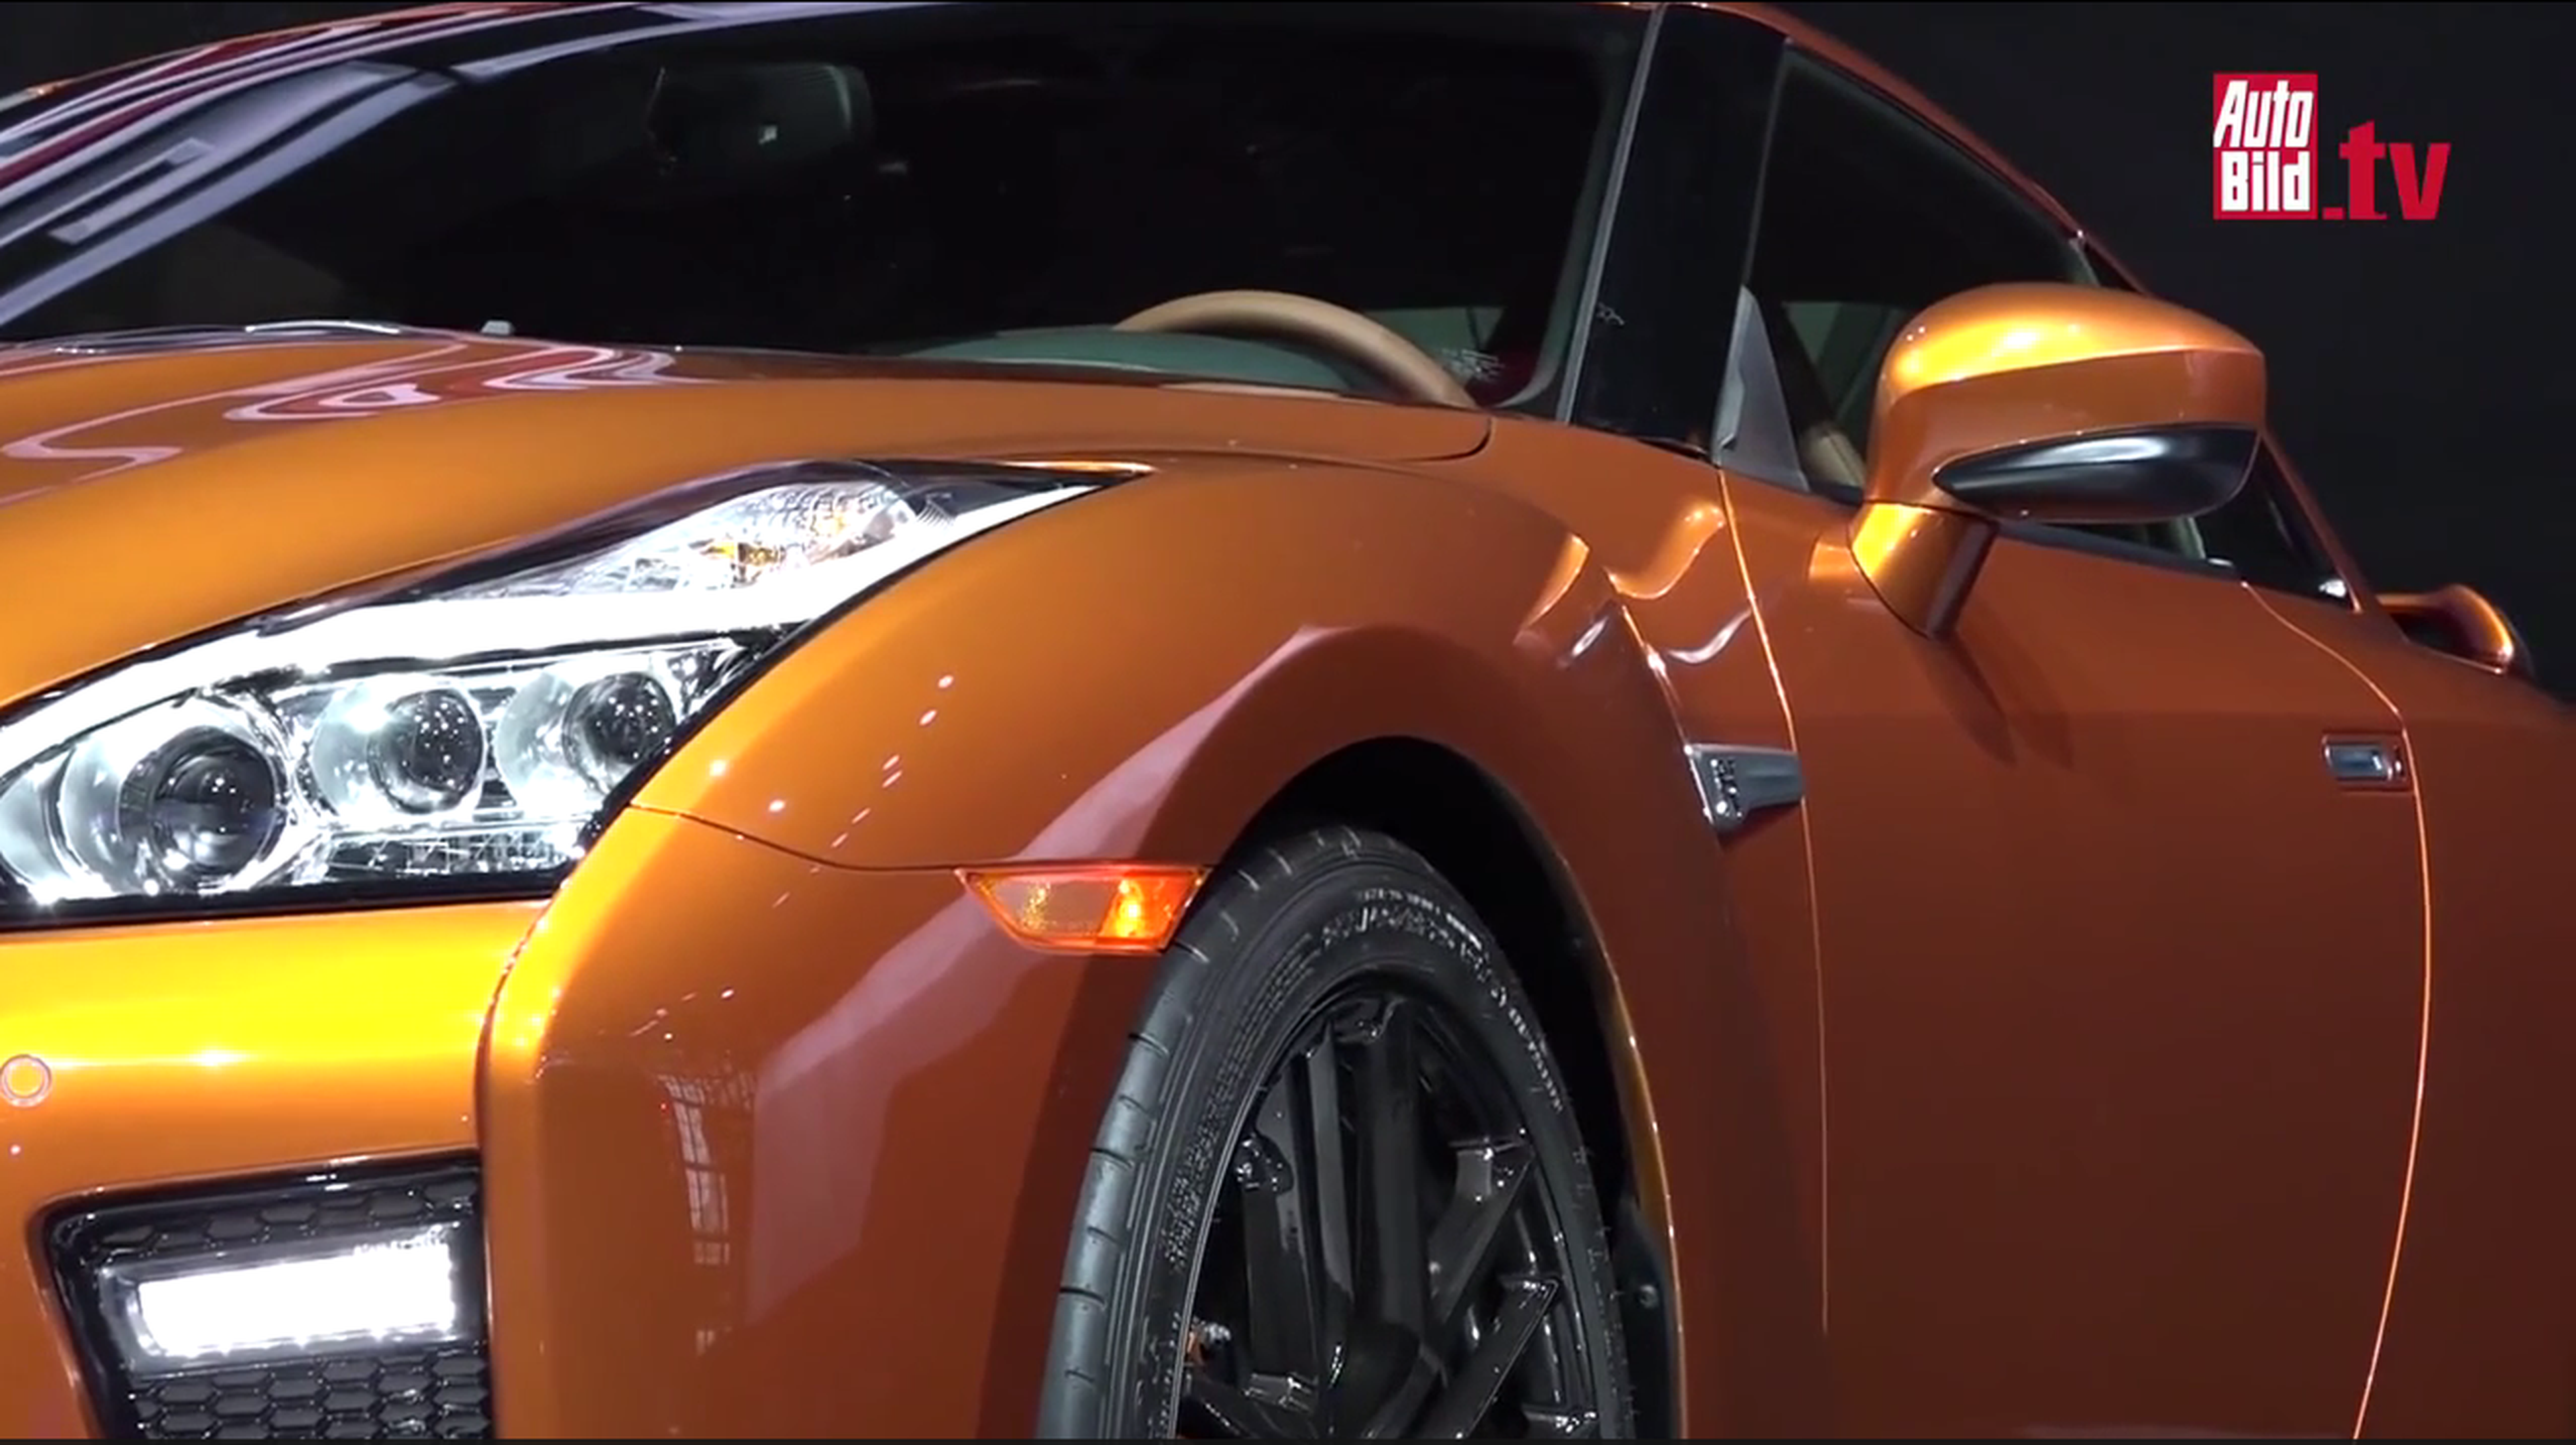 Nissan GT-R 2017: exterior más afilado e interior moderno